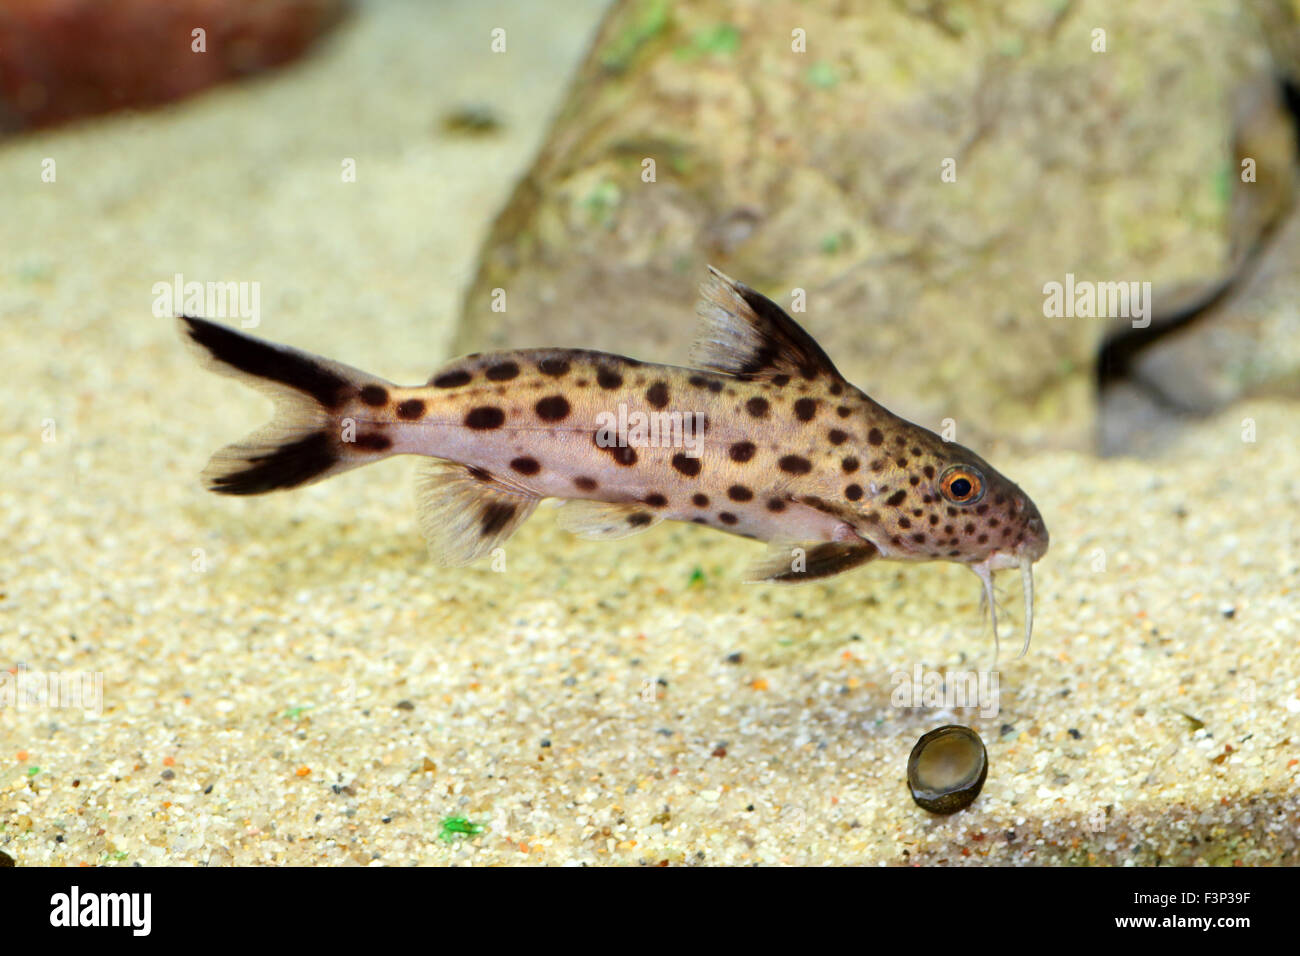 Cuckoo catfish (Synodontis multipunctatus) in Lake Tanganyika Stock Photo